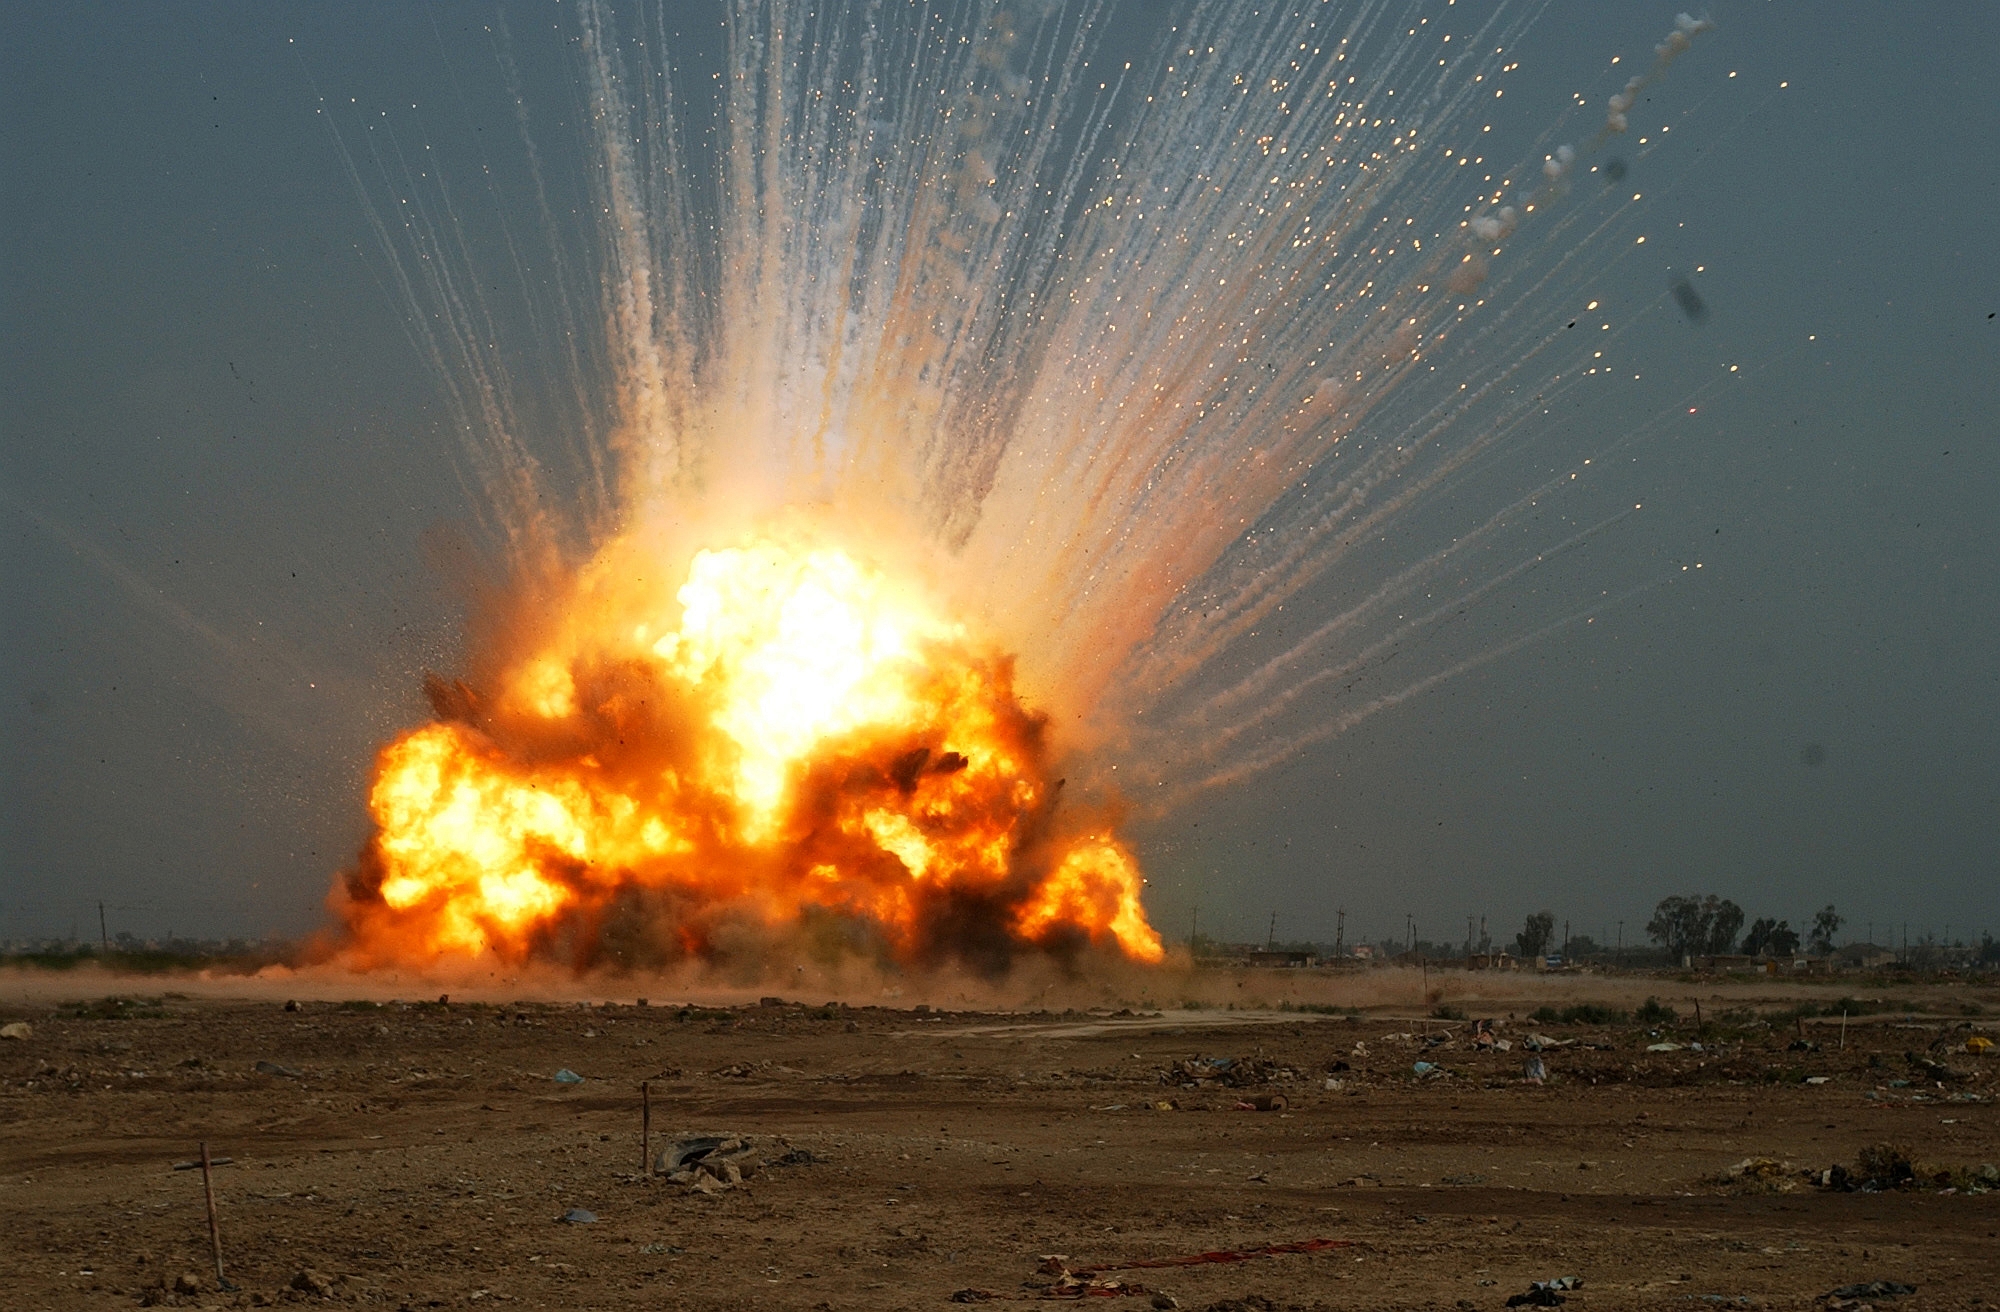 http://chamorrobible.org/images/photos/gpw-20050304-UnitedStatesArmy-061014-A-5493S-057-cache-unexploded-ordnance-detonated-near-Forward-Operating-Base-Falcon-Iraq-20061014-large.jpg